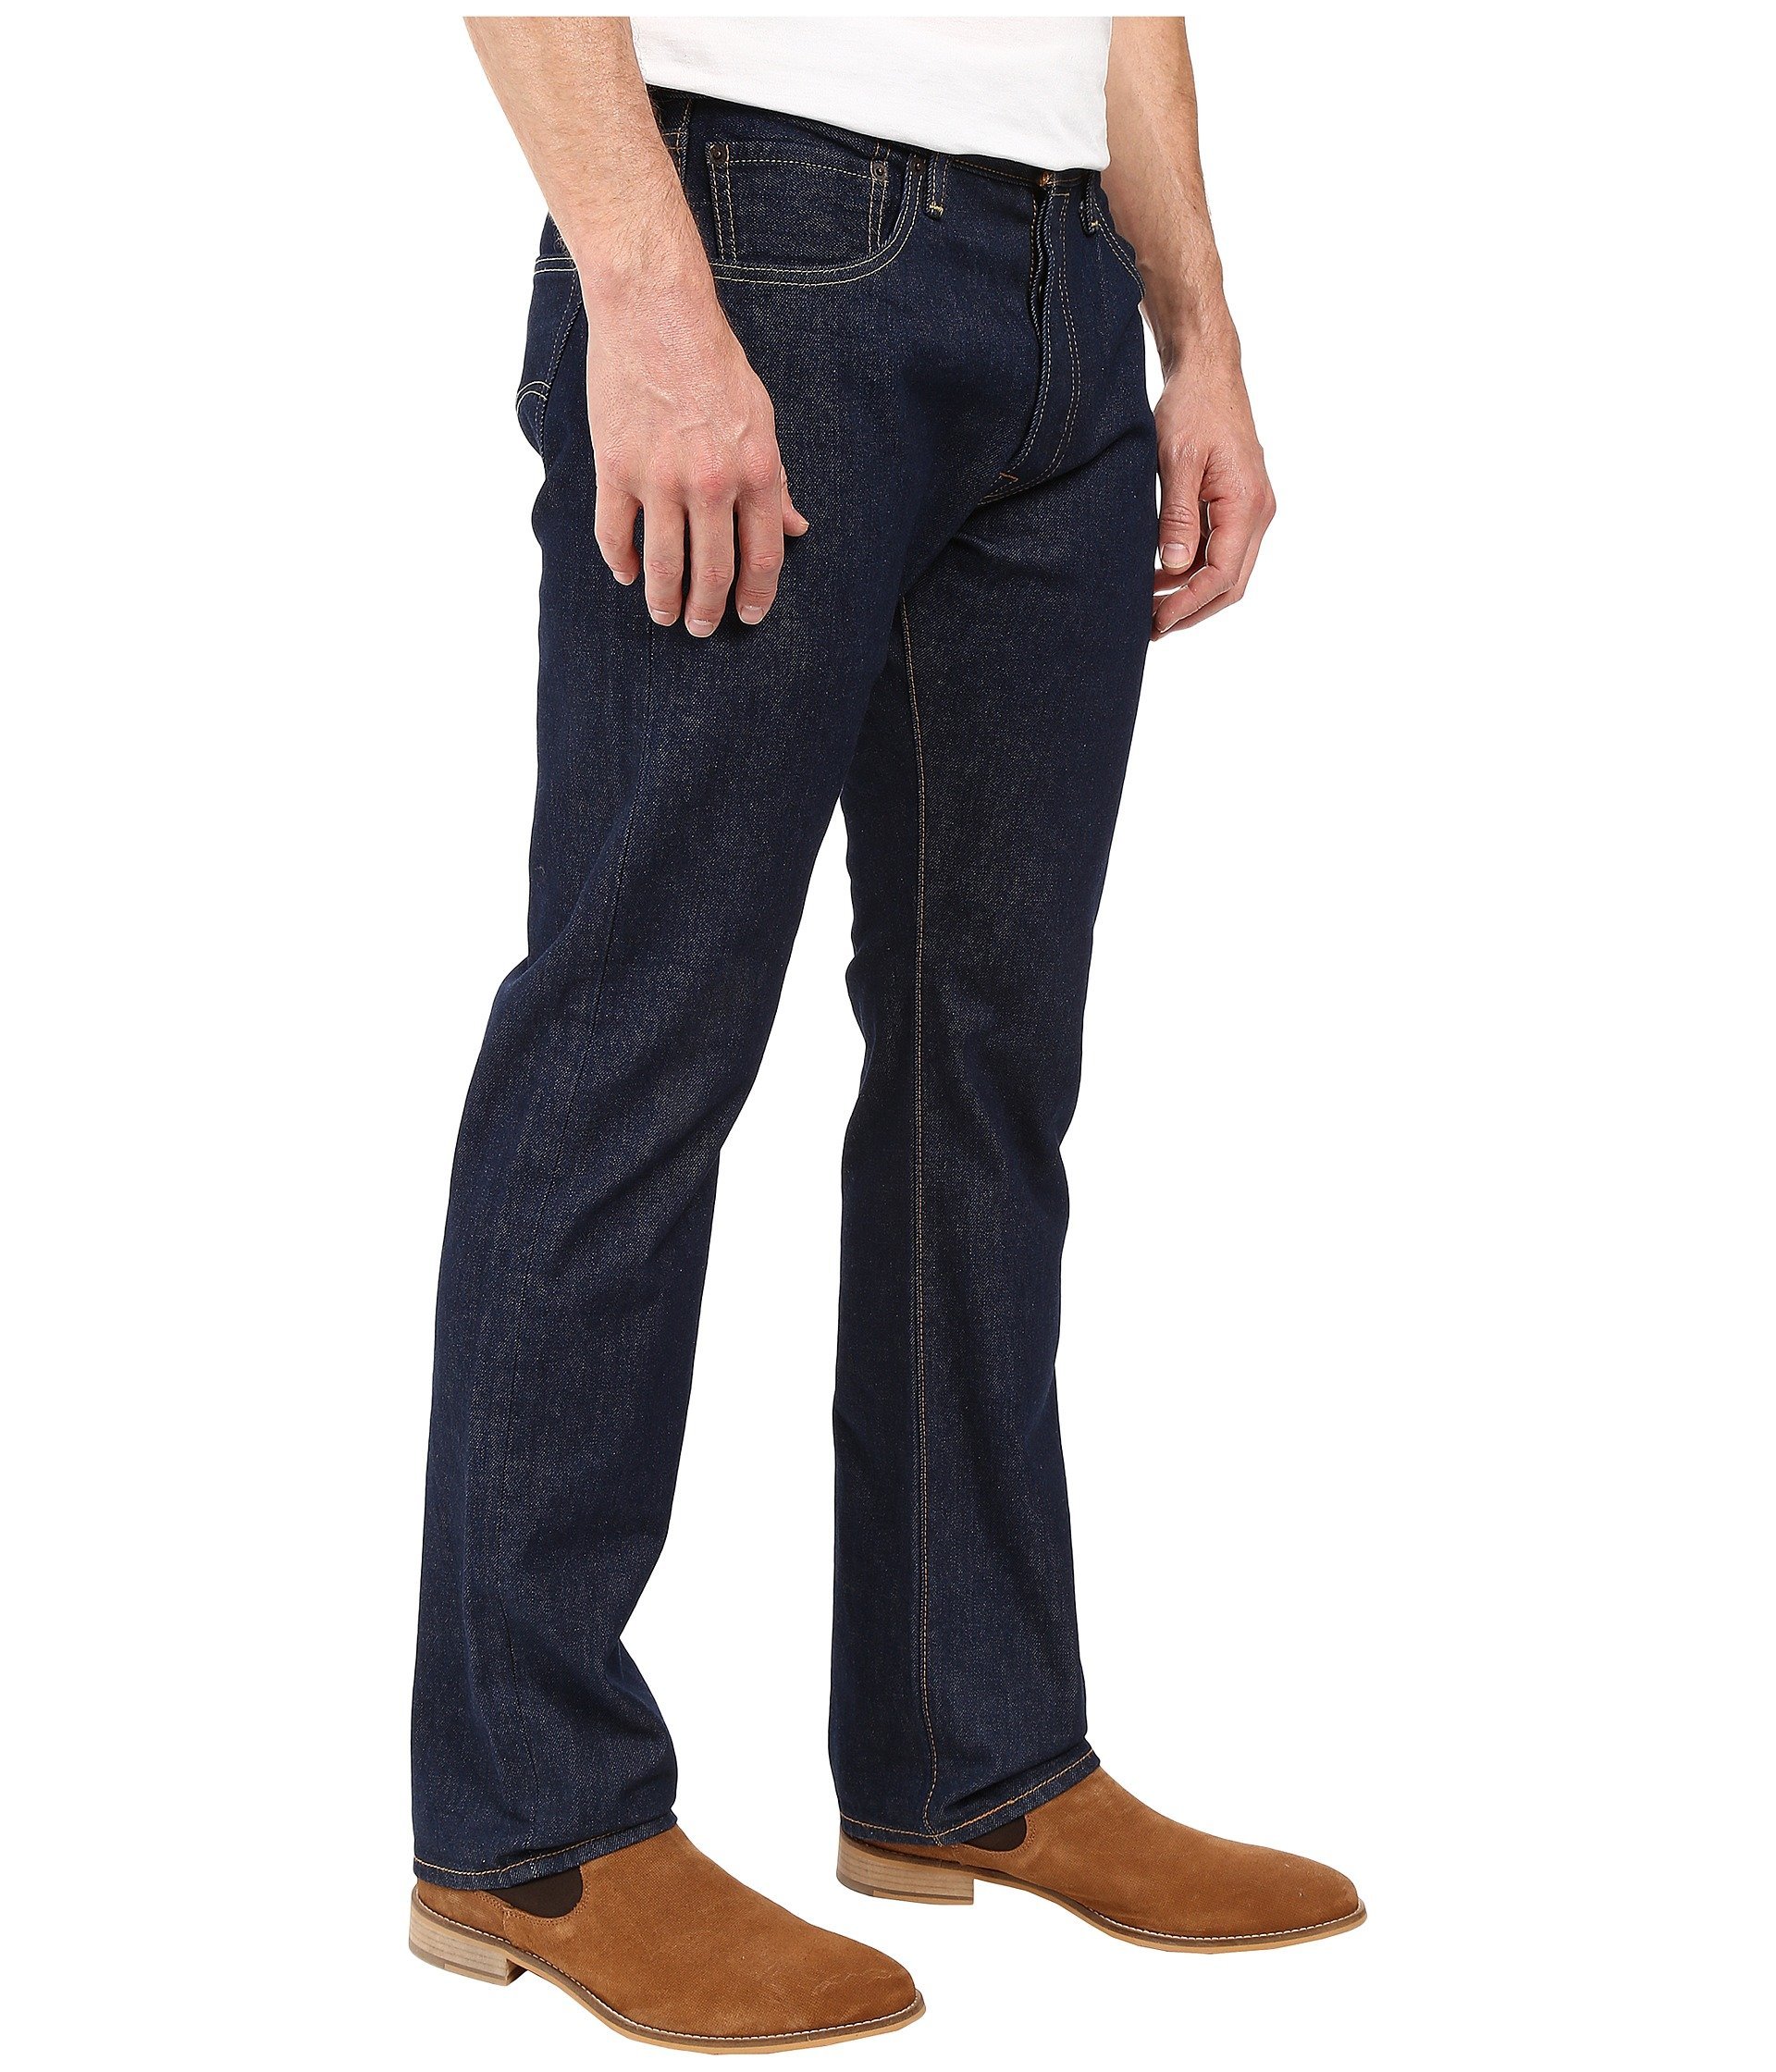 Levi's Men's 501 Original Fit Jeans, The Rose (Waterless) $29.98